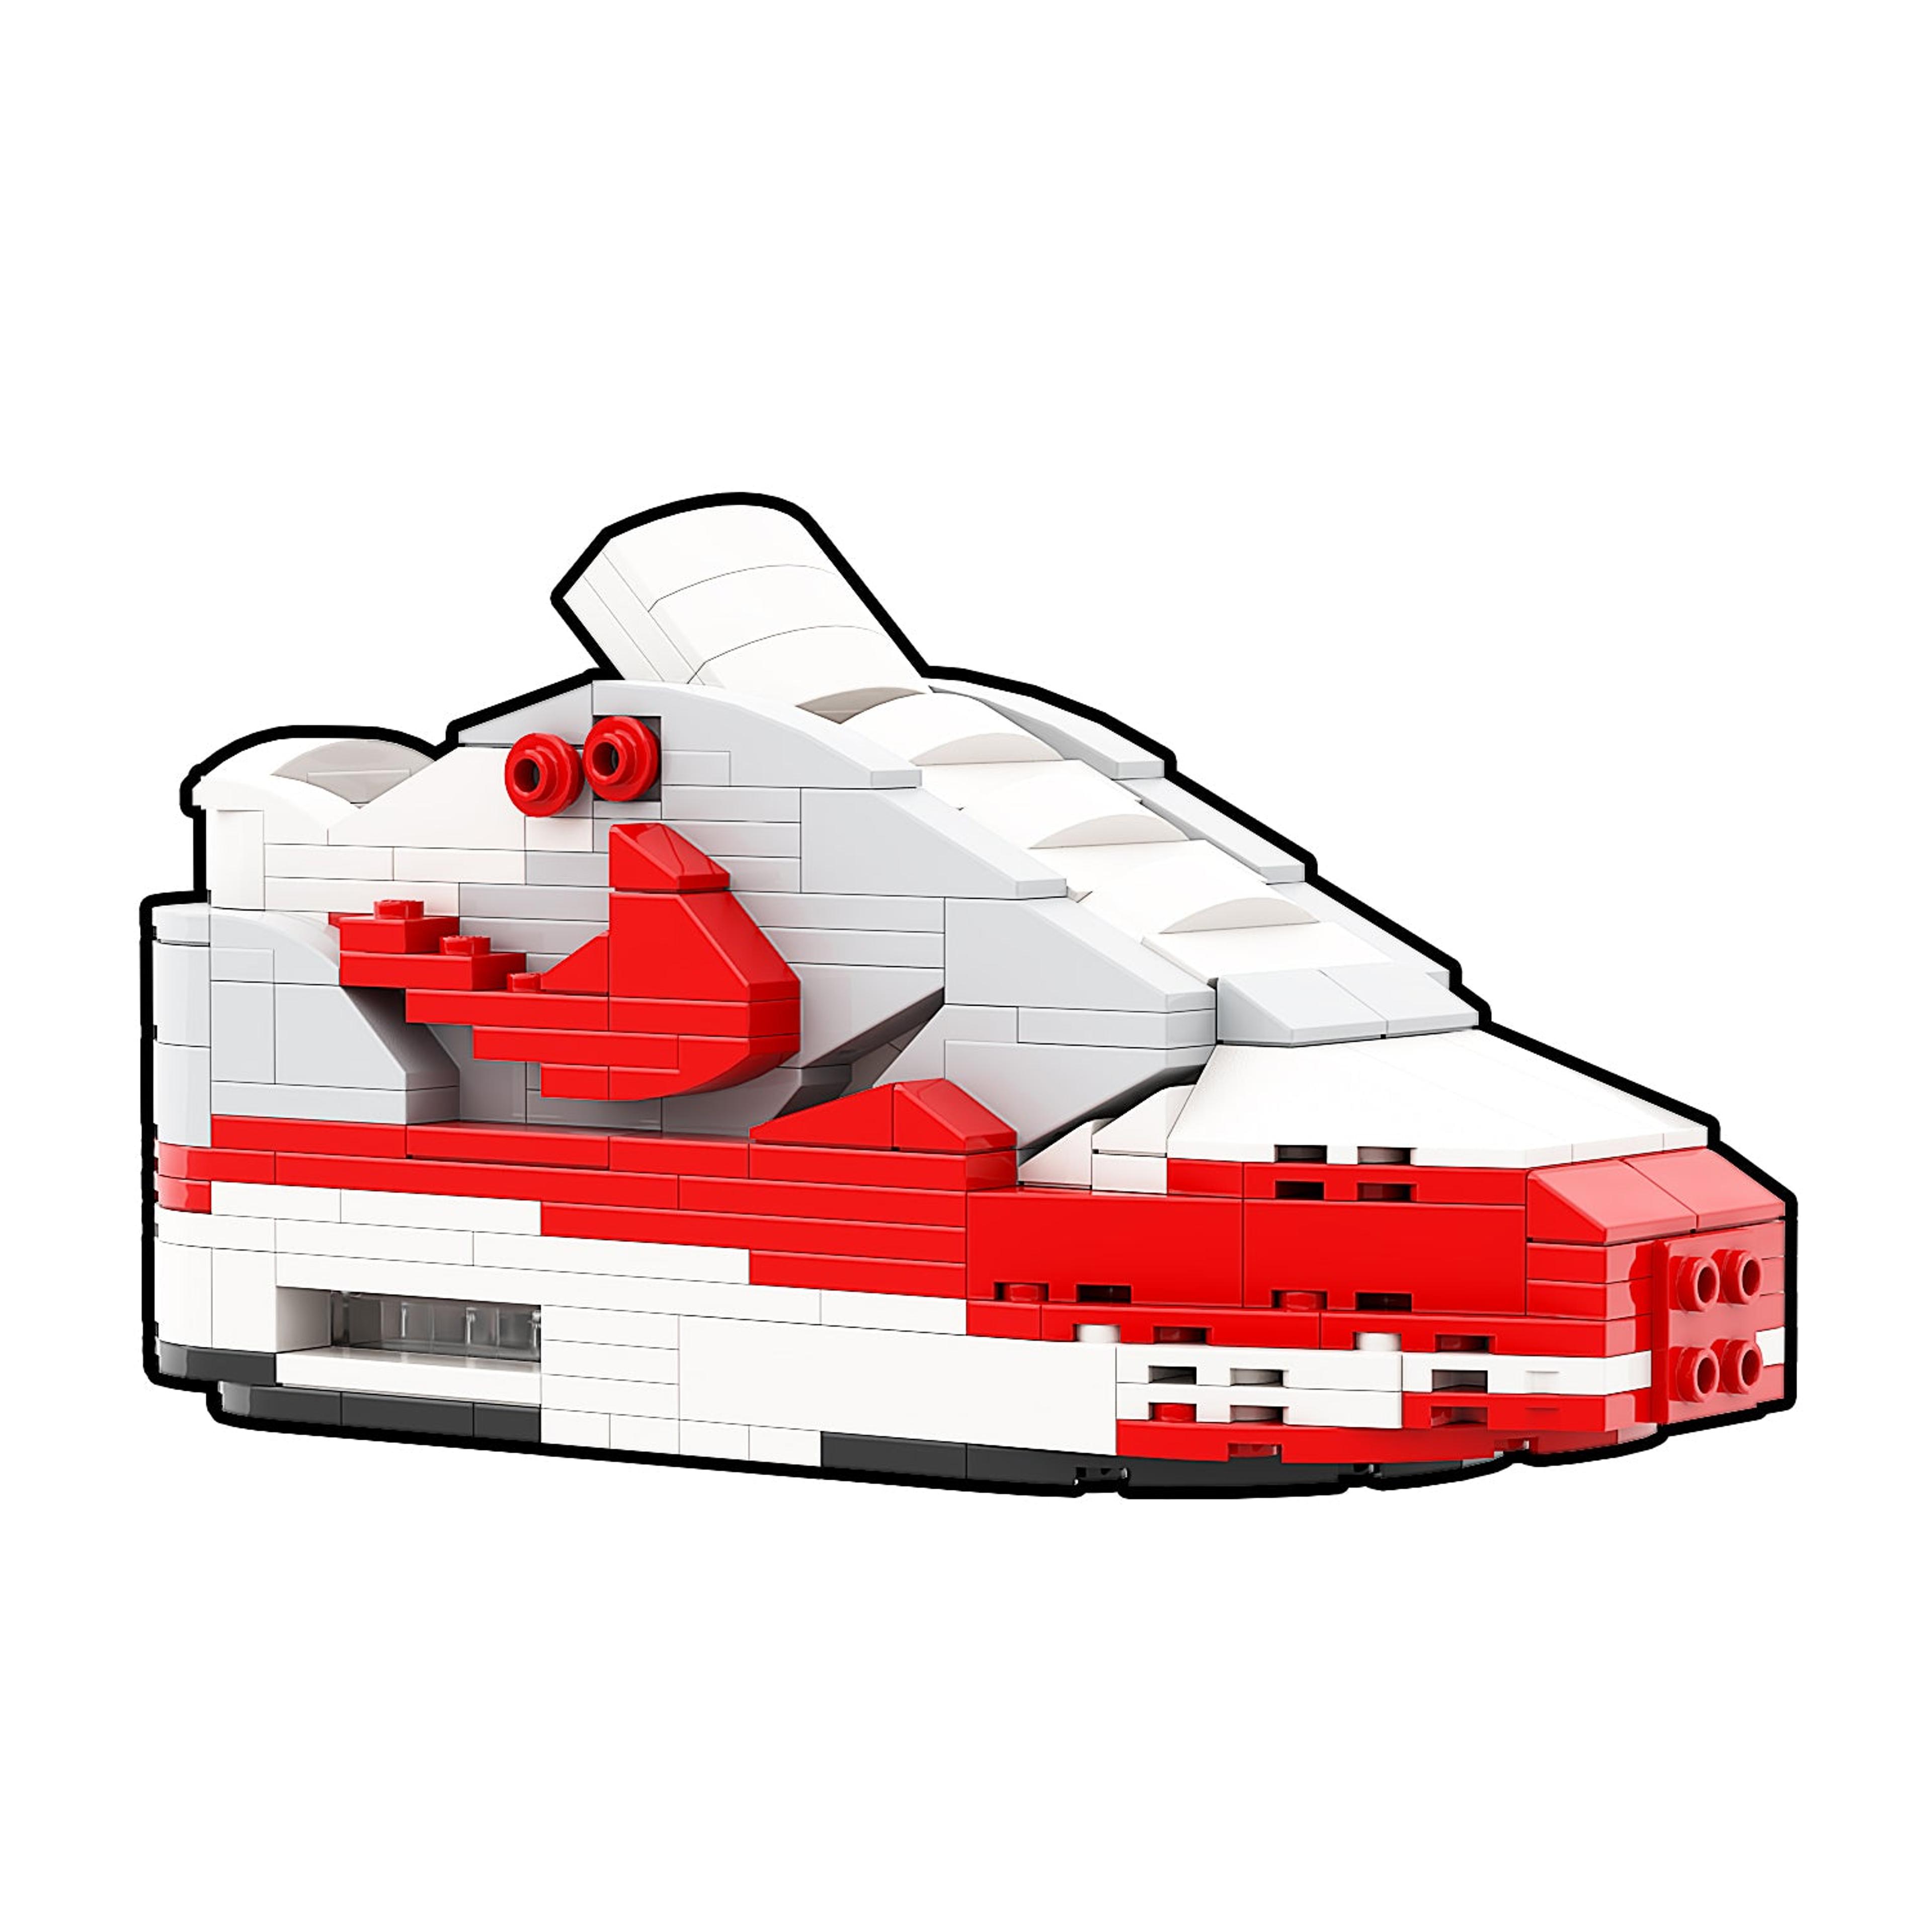 Alternate View 6 of REGULAR "Air Max 1 OG" Sneaker Bricks with Mini Figure